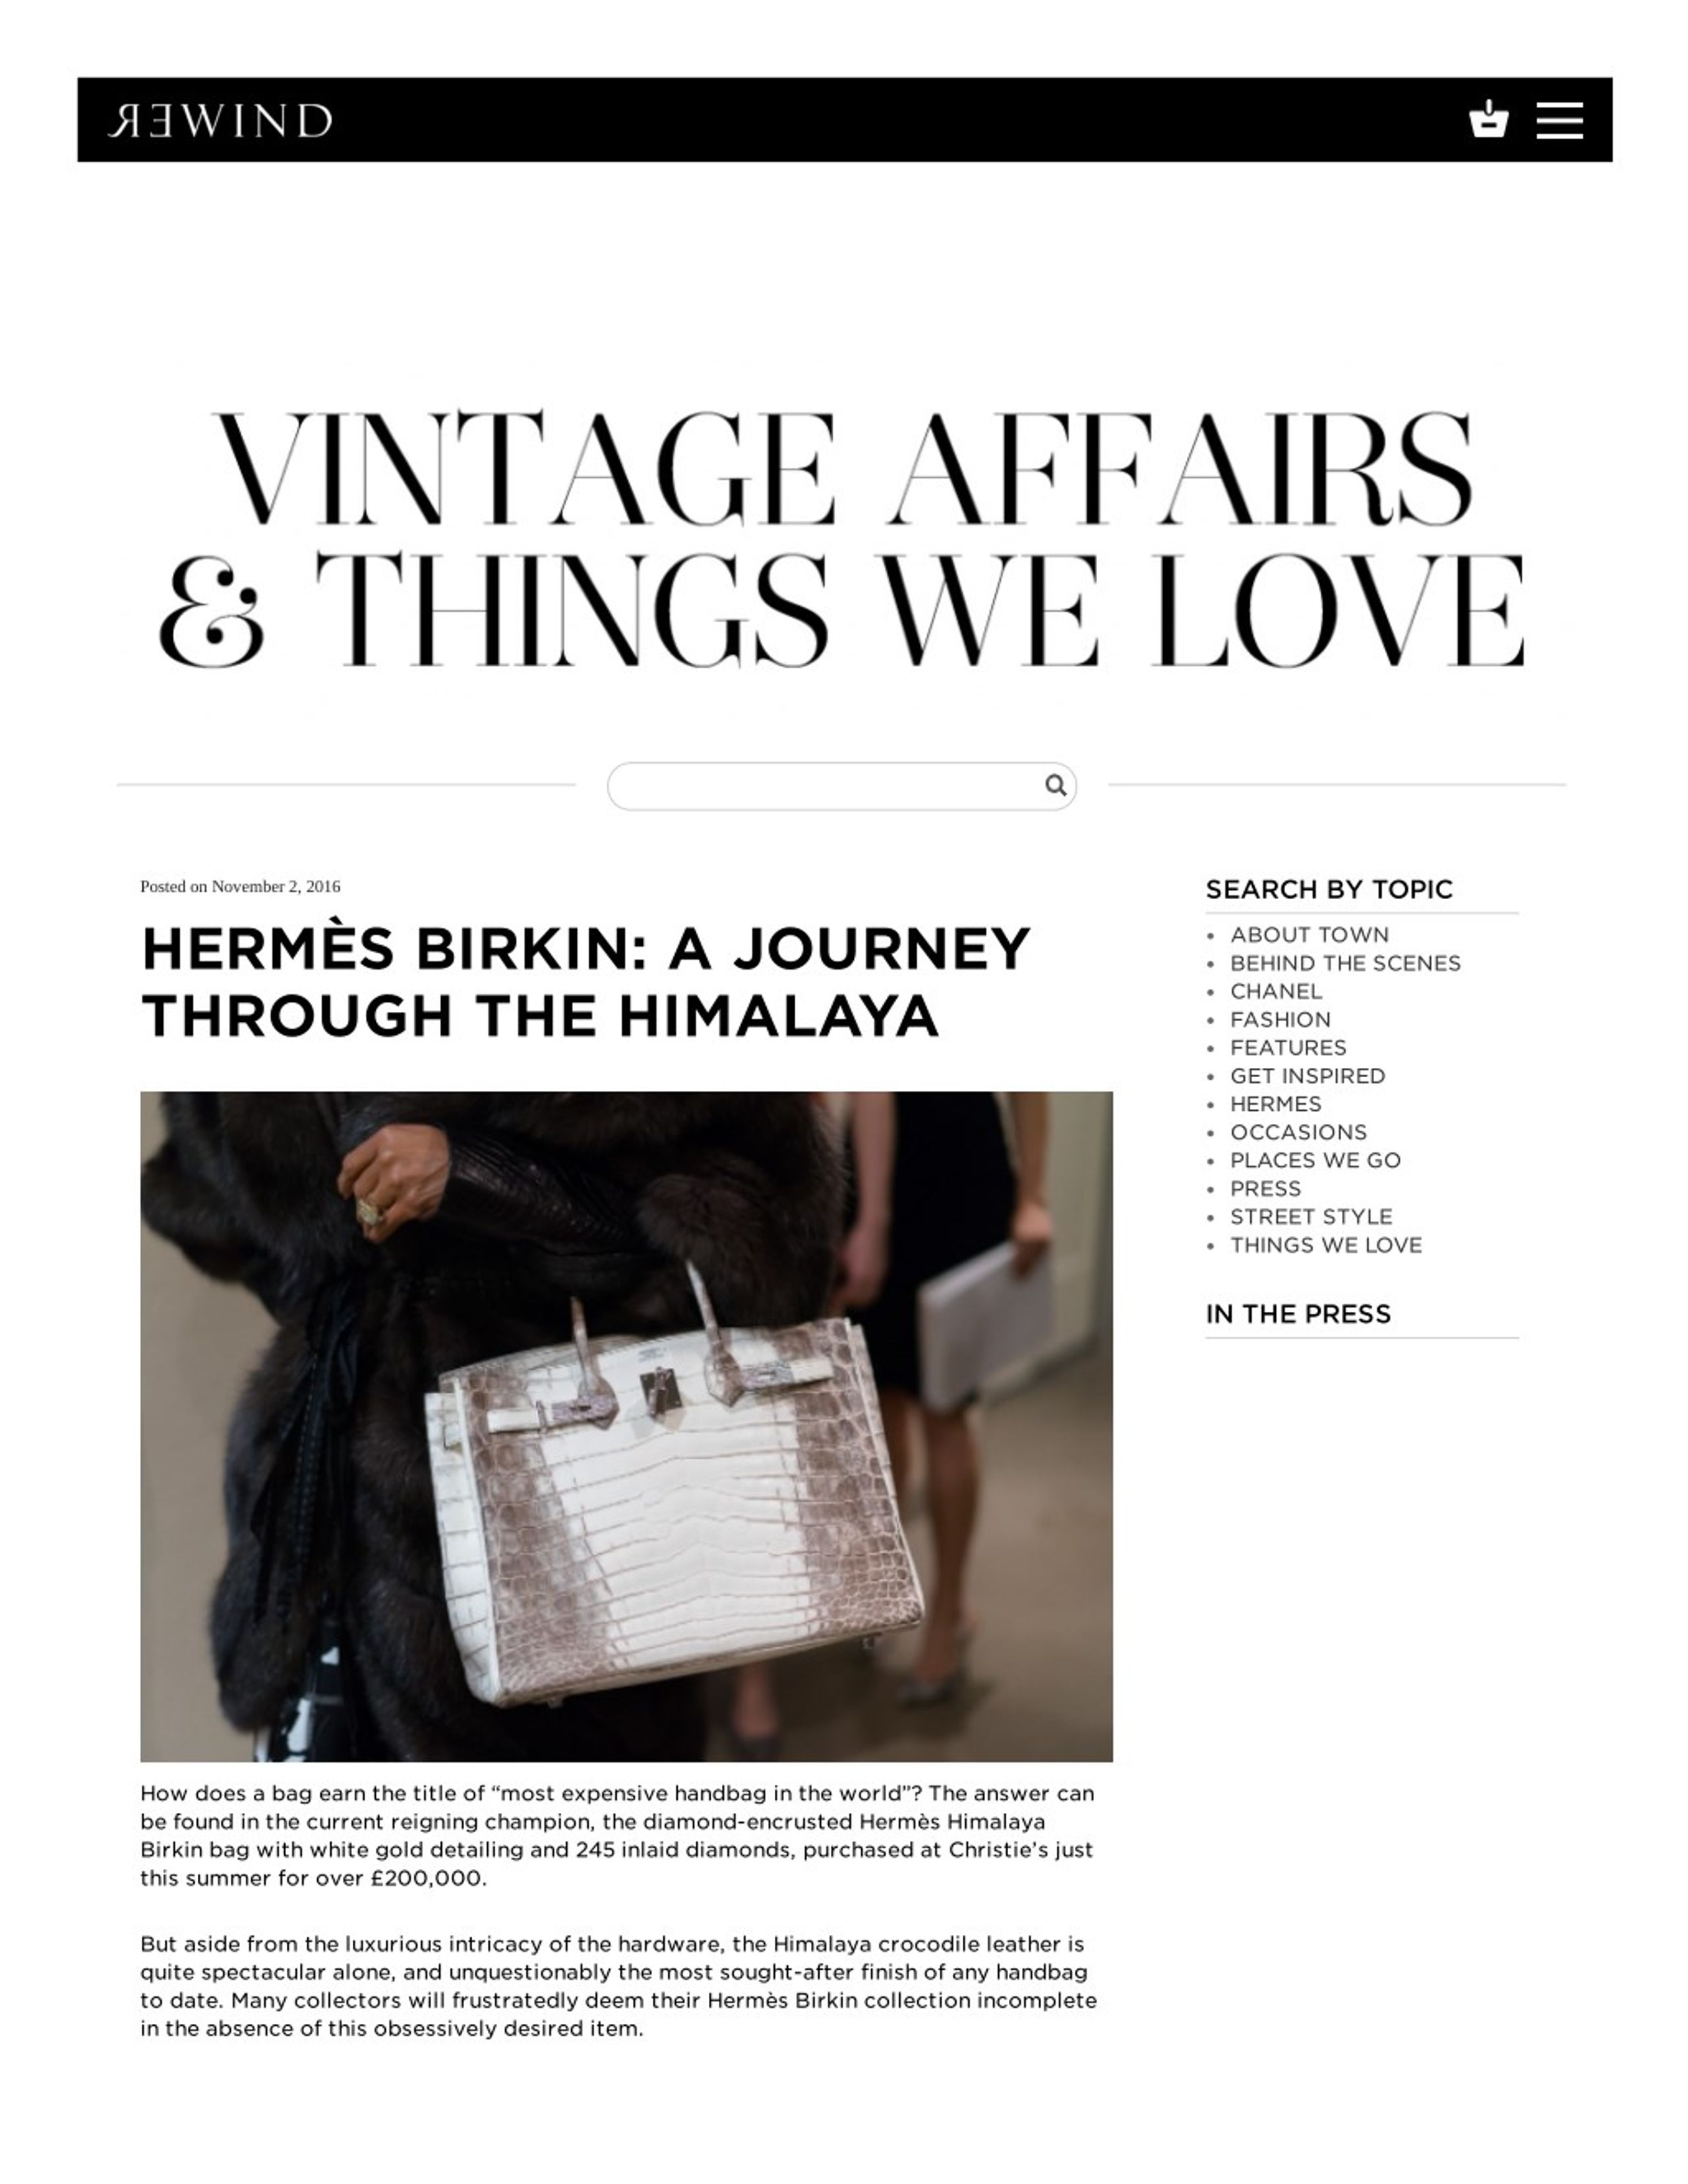 Vintage Hermès and the original Birkin bag: fashion lover